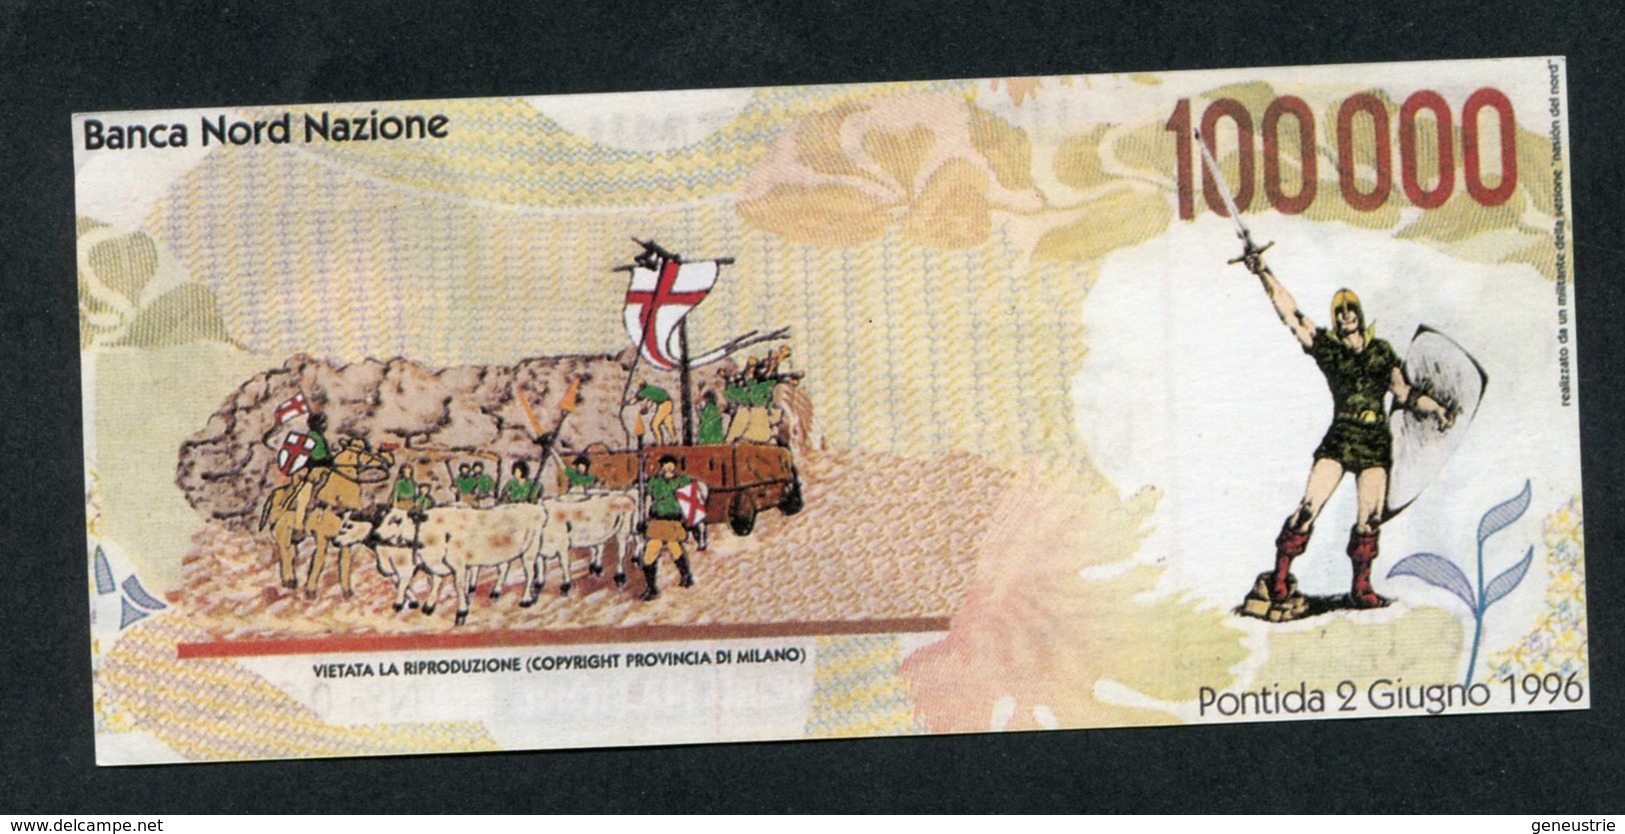 Billet De Banque 1996 Ligue Du Nord "100000 Cincentmila - Banca Della Padania Libera E Independente" Italie - [ 8] Vals En Specimen